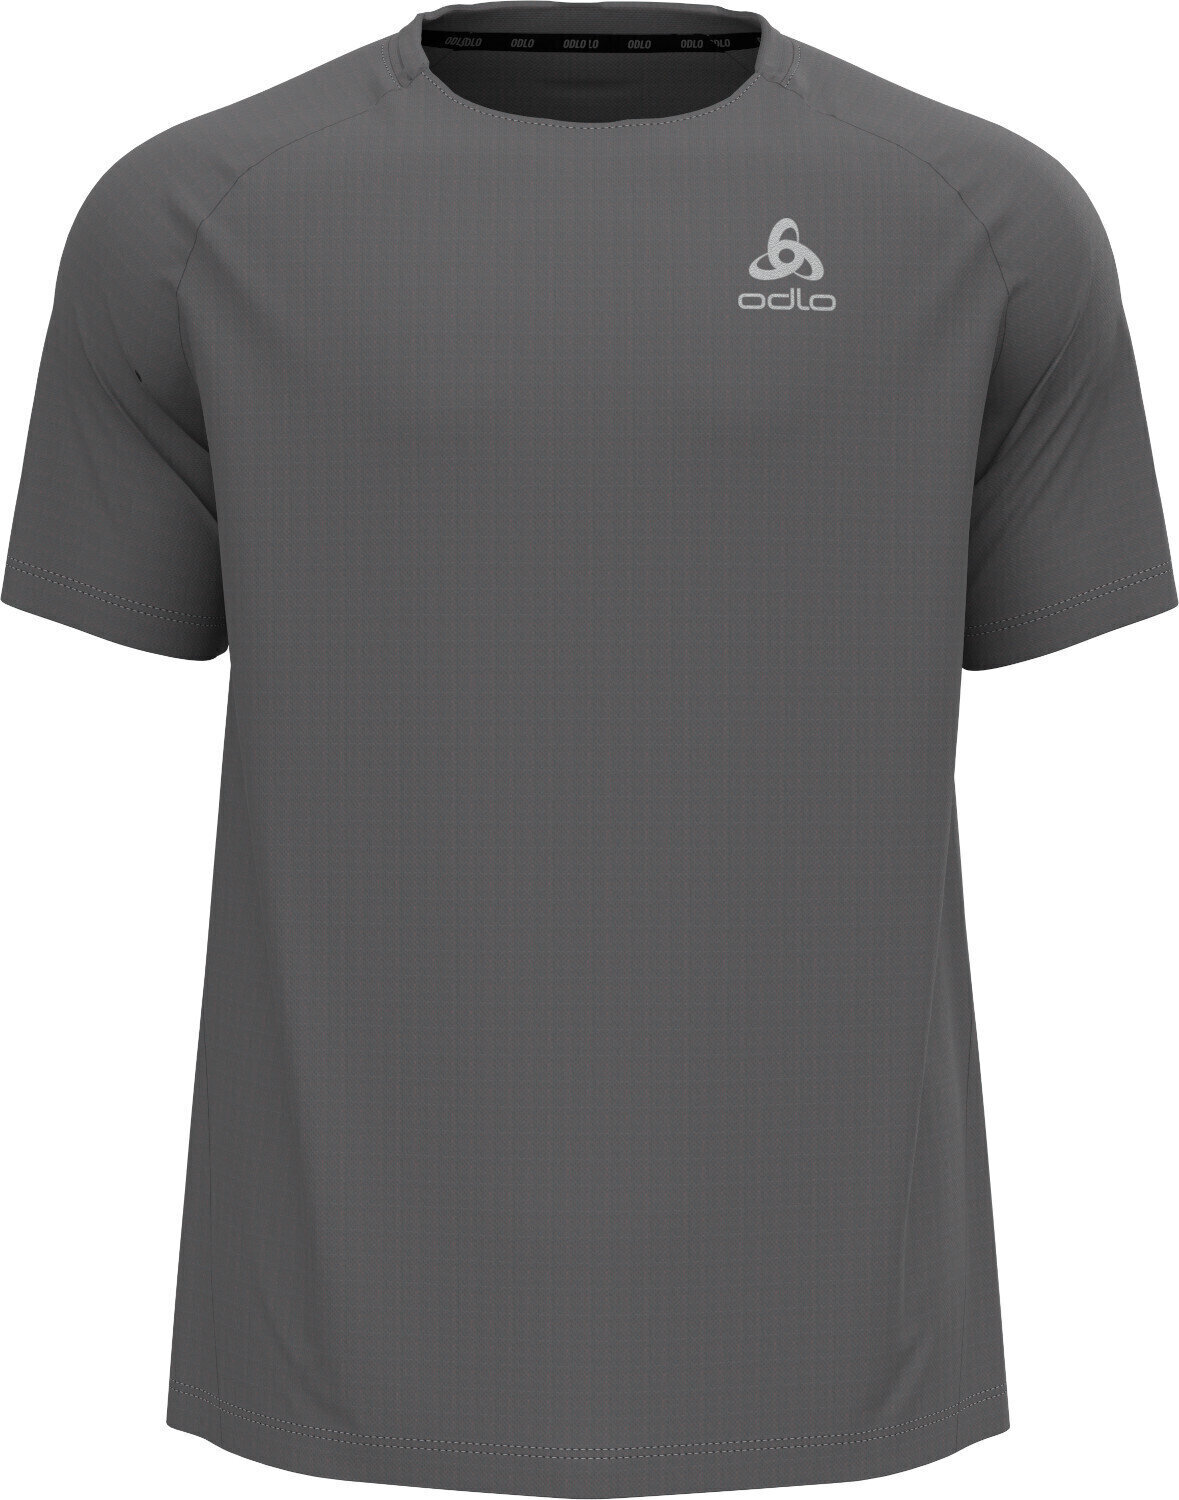 Laufshirt mit Kurzarm
 Odlo Essential T-Shirt Steel Grey M Laufshirt mit Kurzarm